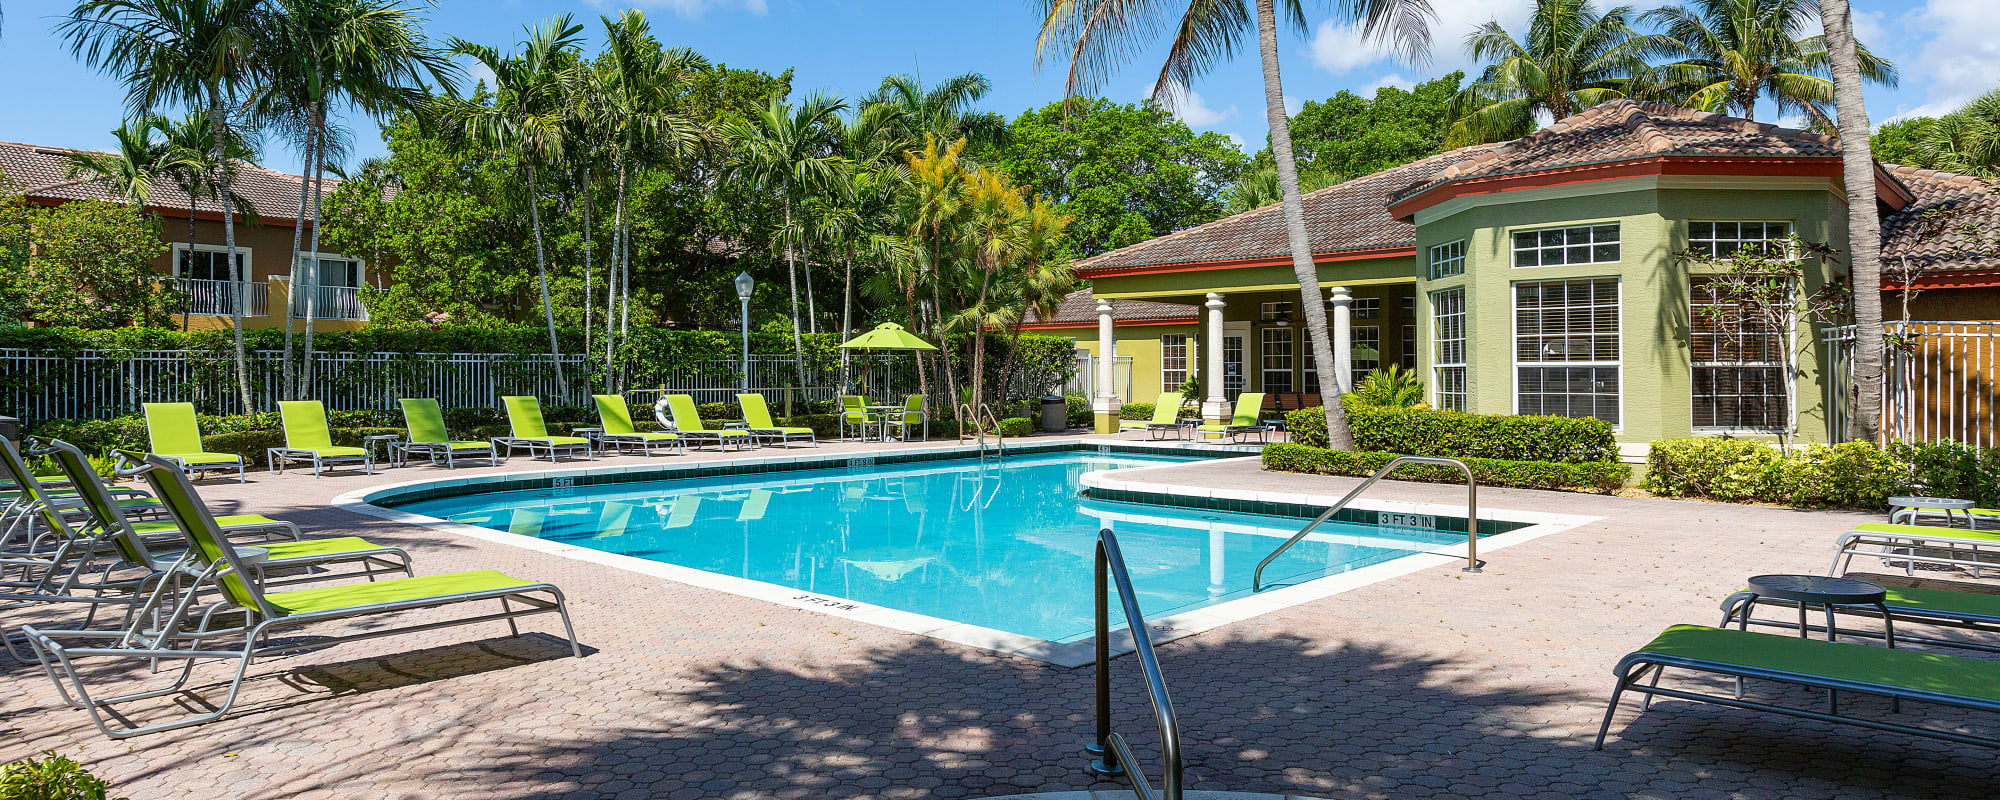 Schedule a tour of Delray Bay Apartments in Delray Beach, Florida